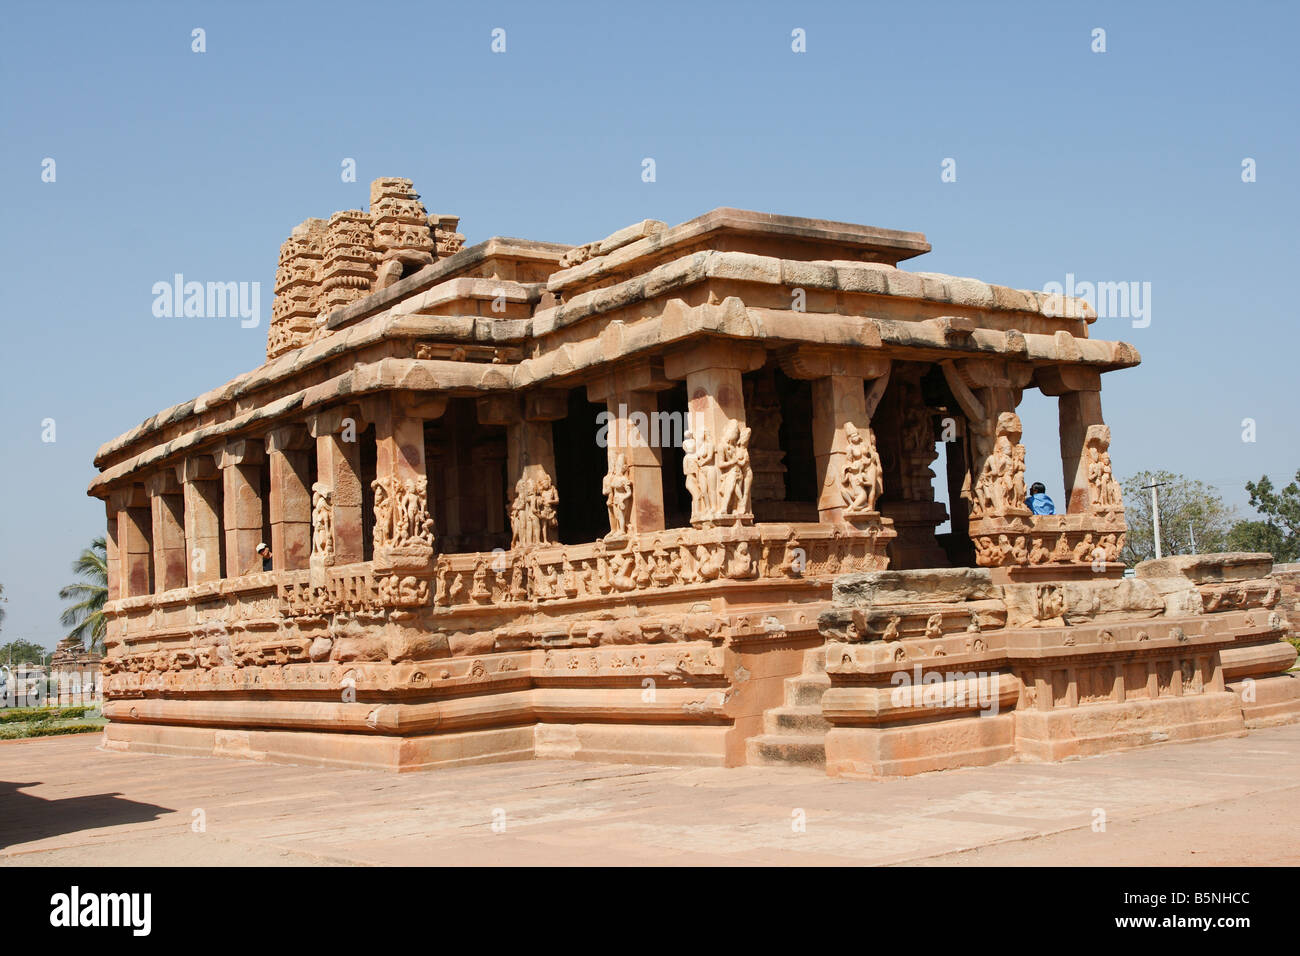 Decorated ancient Hindu temple dedicated to Shiva at the ancient site of Pattadakal, Karnataka, India Stock Photo